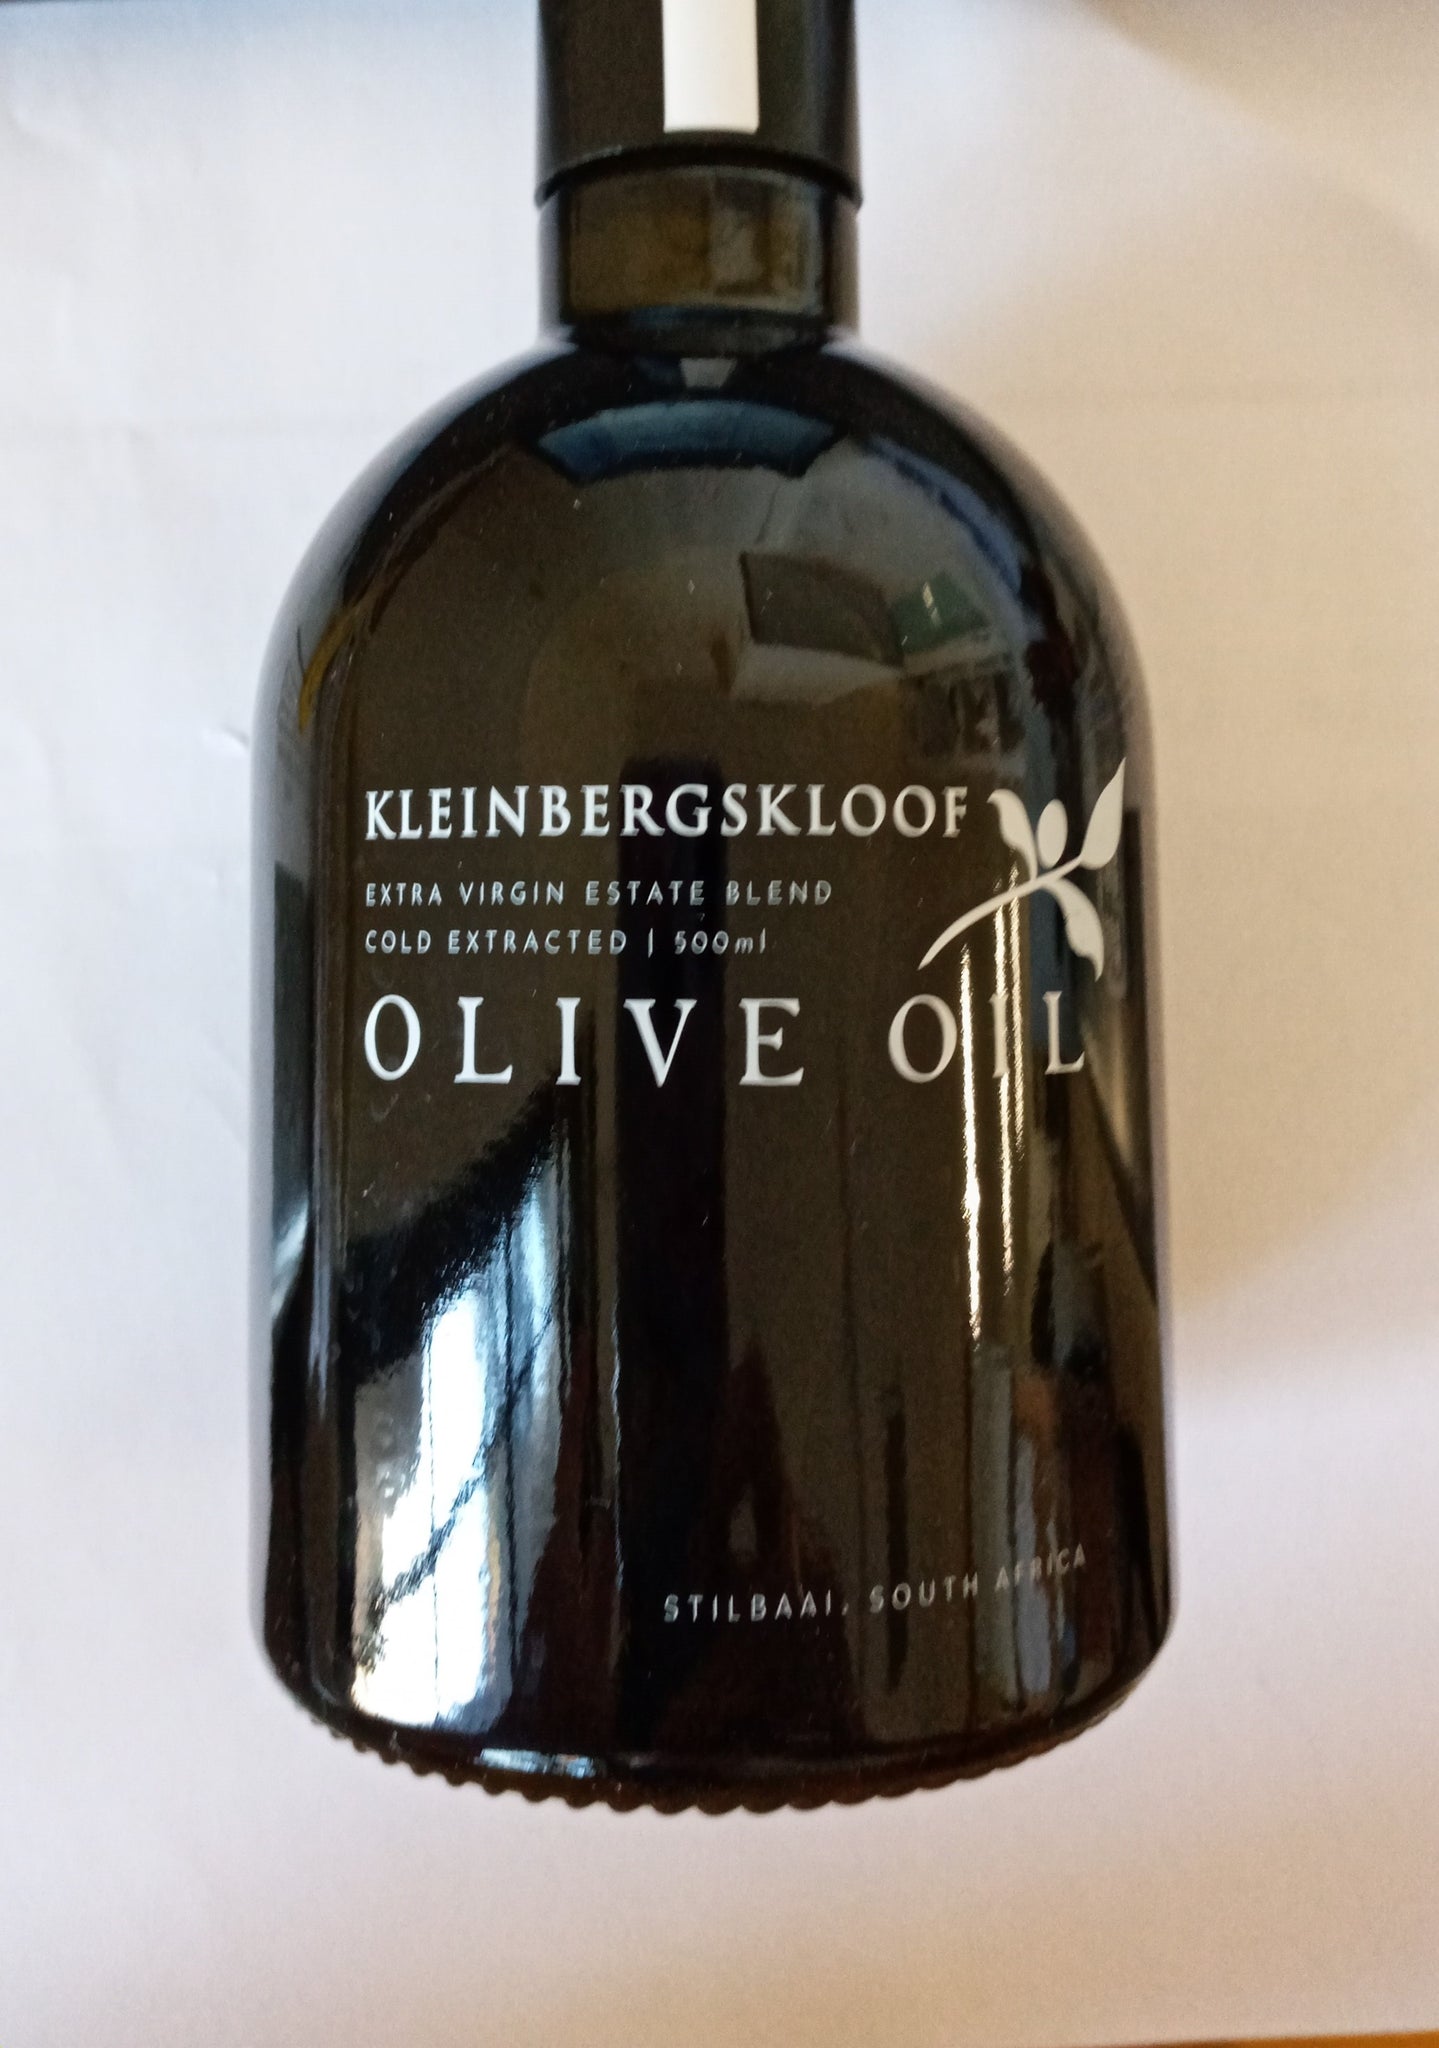 Kleinsbergkloof Olive Oil 500ml